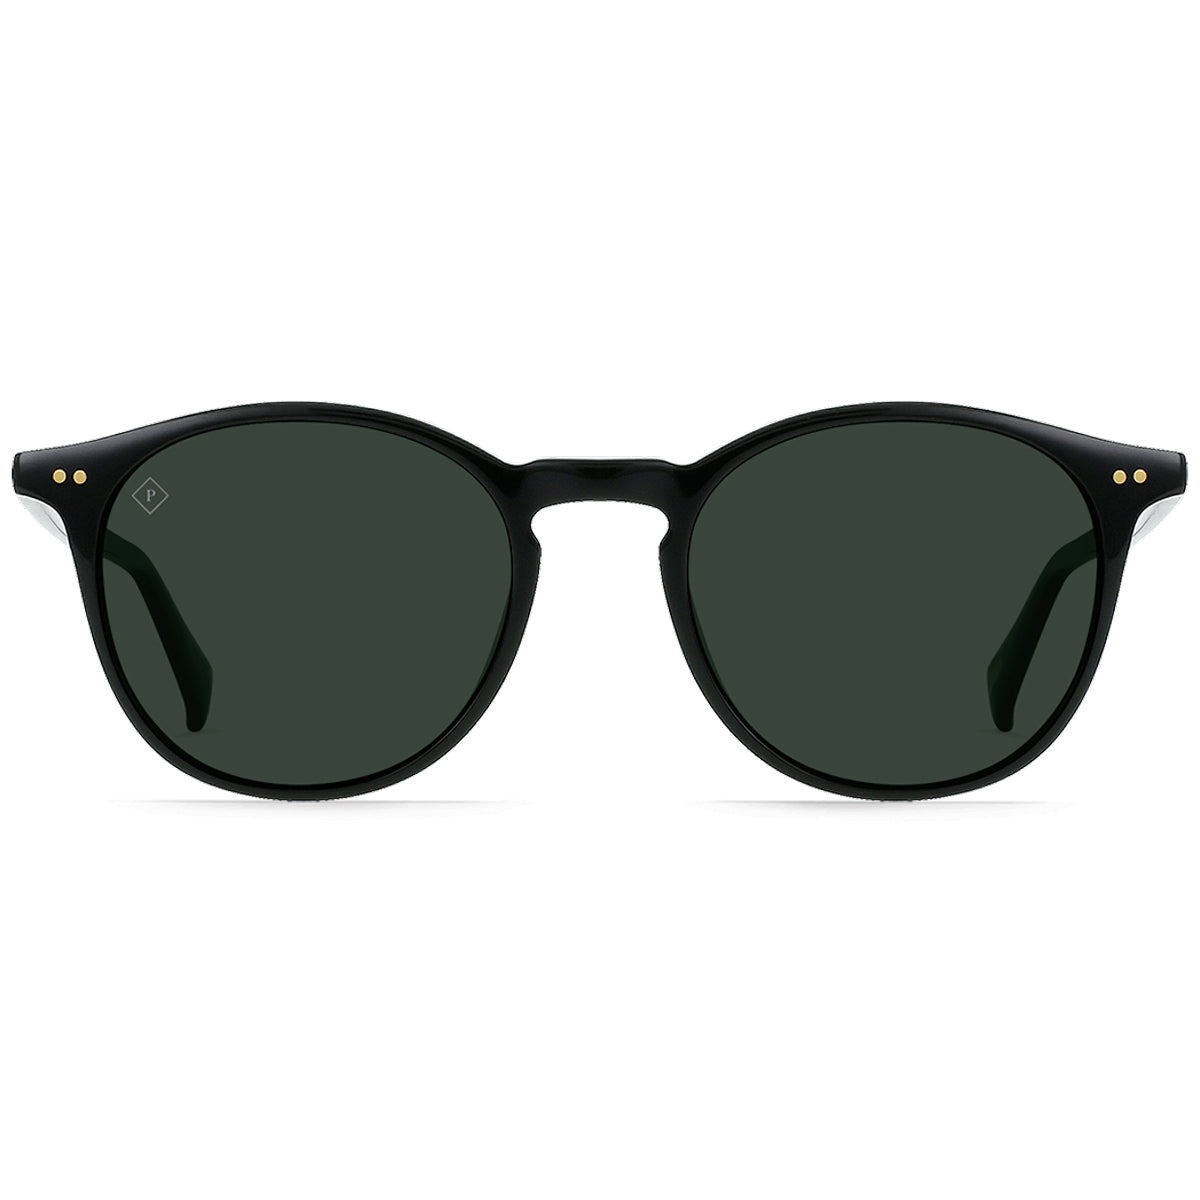 Raen Basq Sunglasses - Recycled Black/Green Polarized - 50 image 2